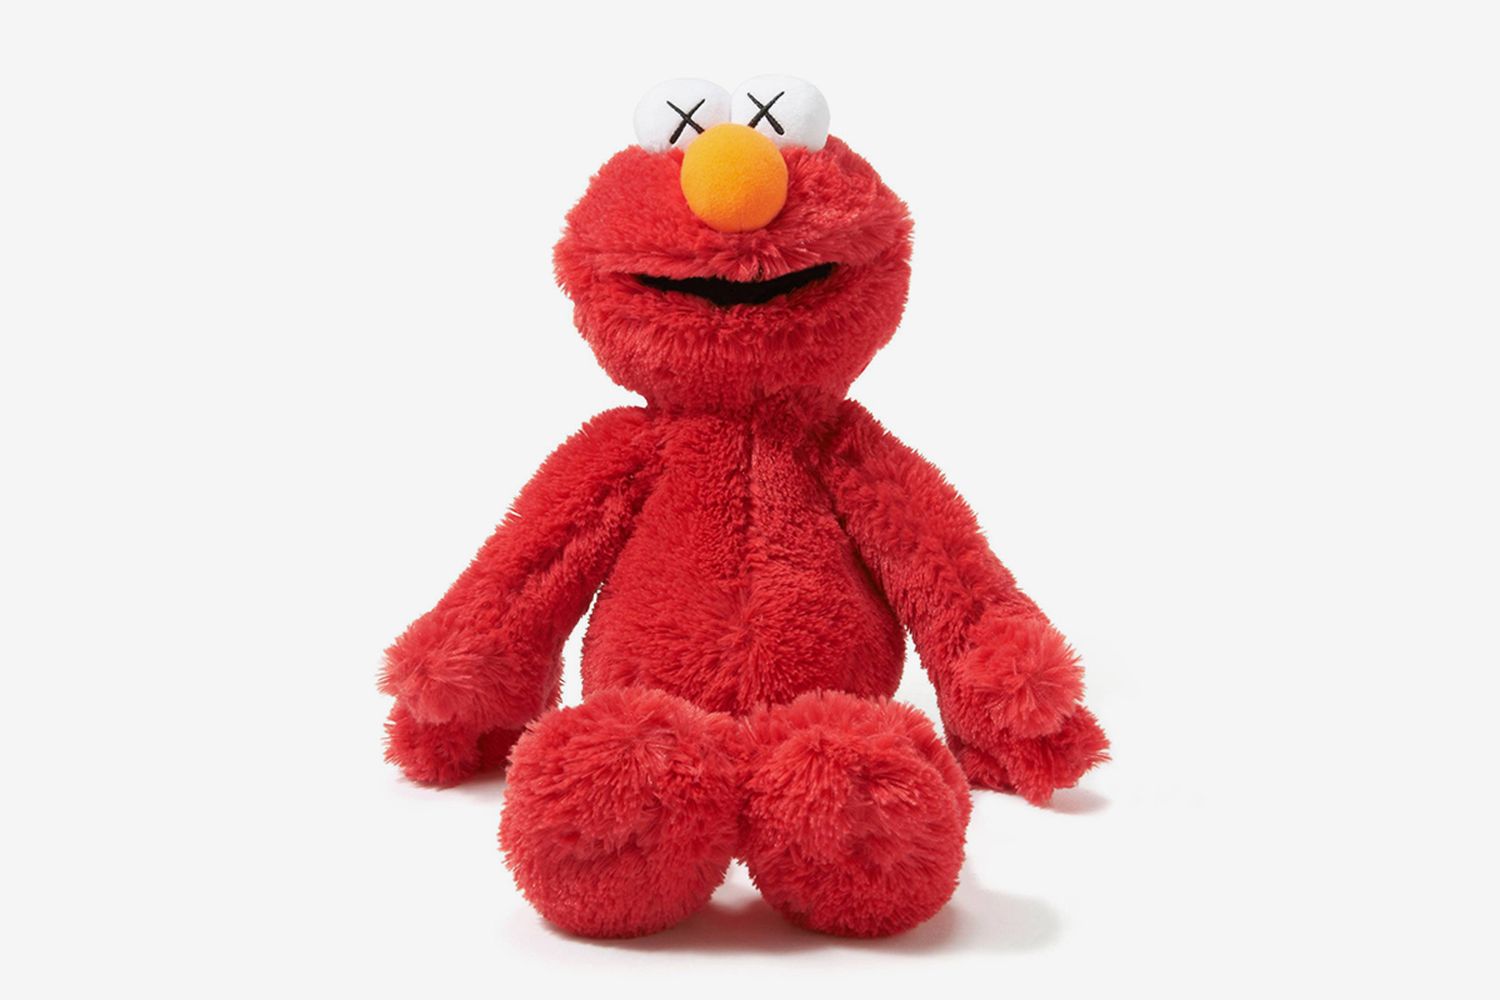 Elmo Toy